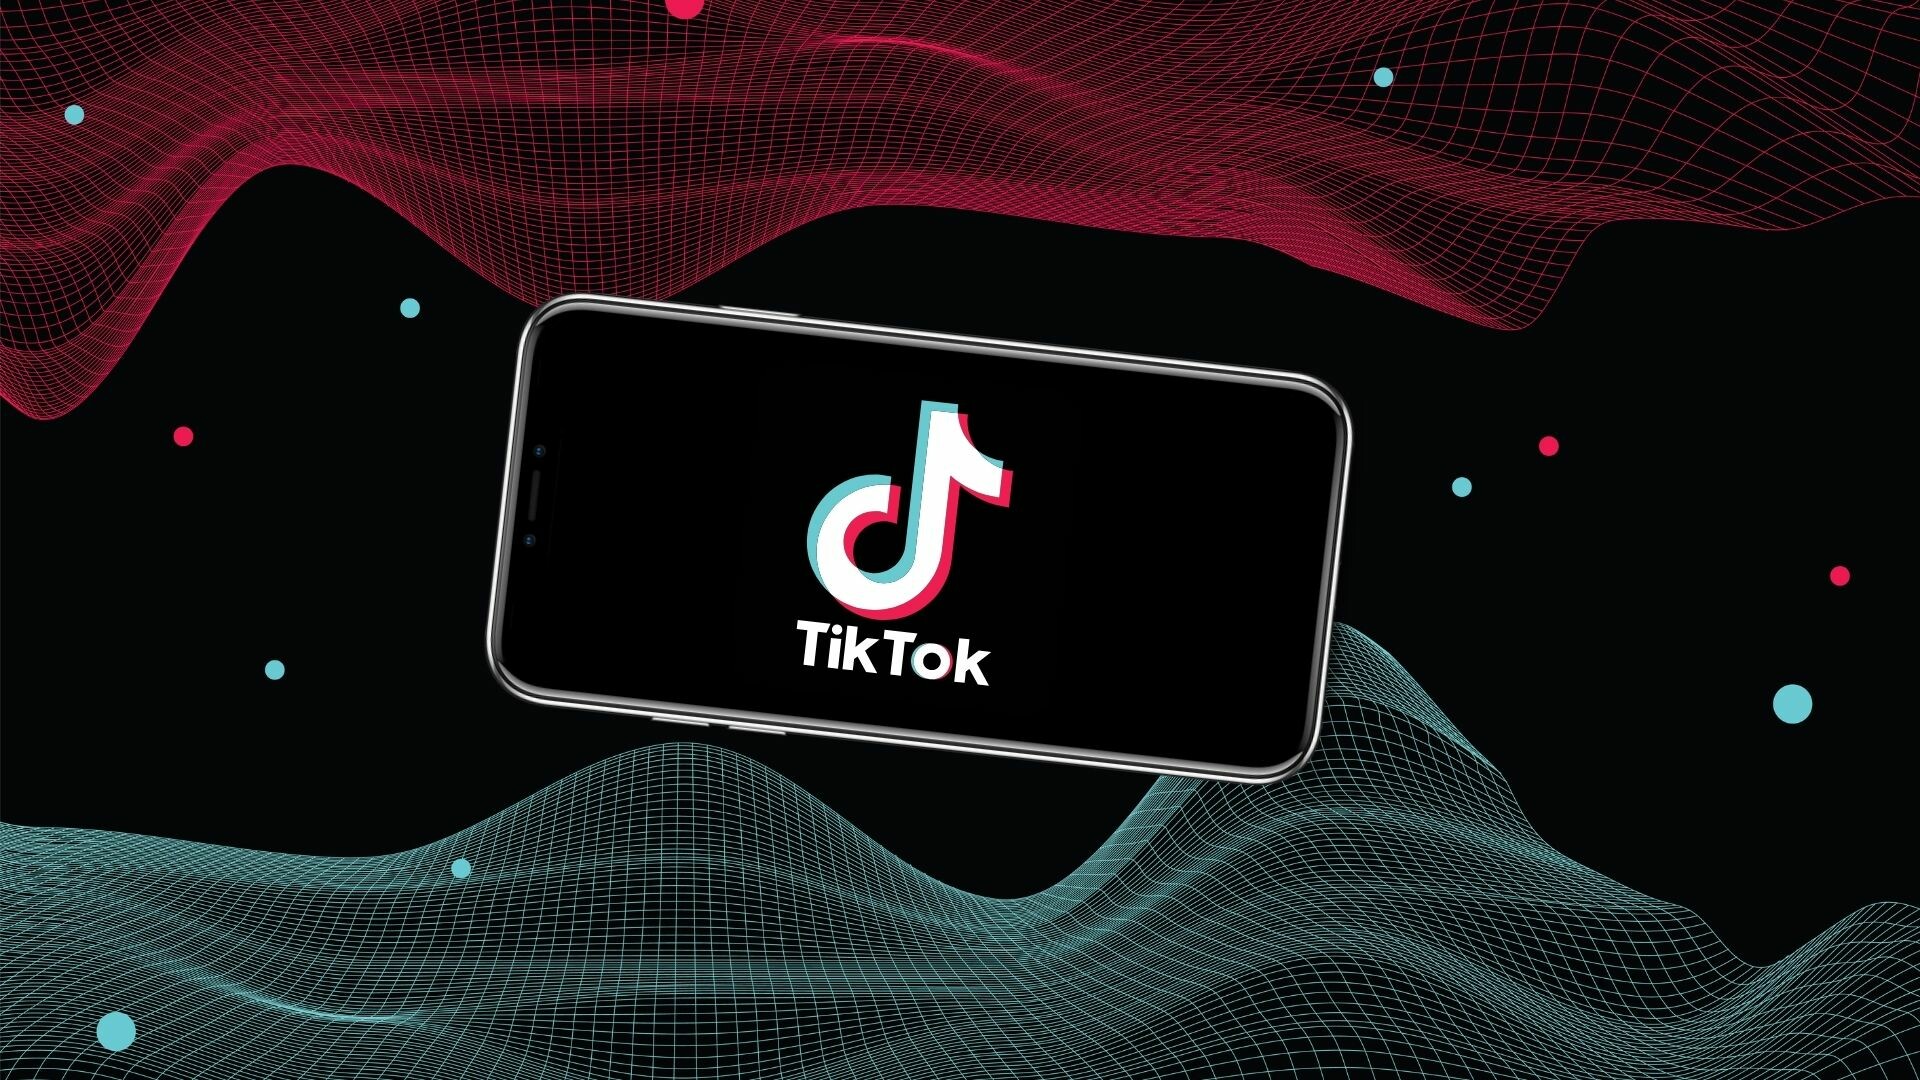 Horizontal phone with TikTok logo on it.